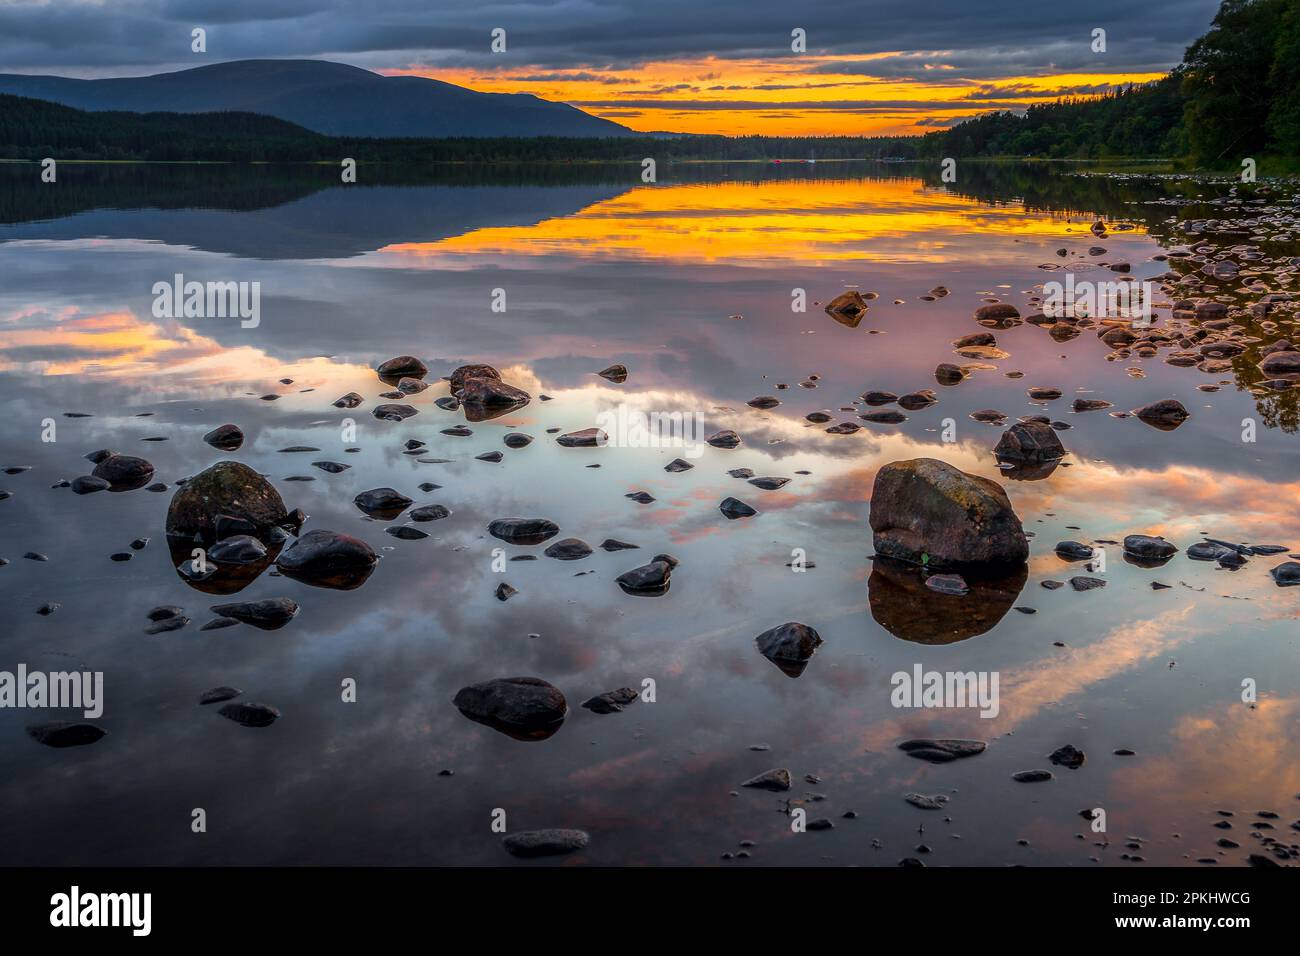 Loch Morlich at sunset Stock Photo